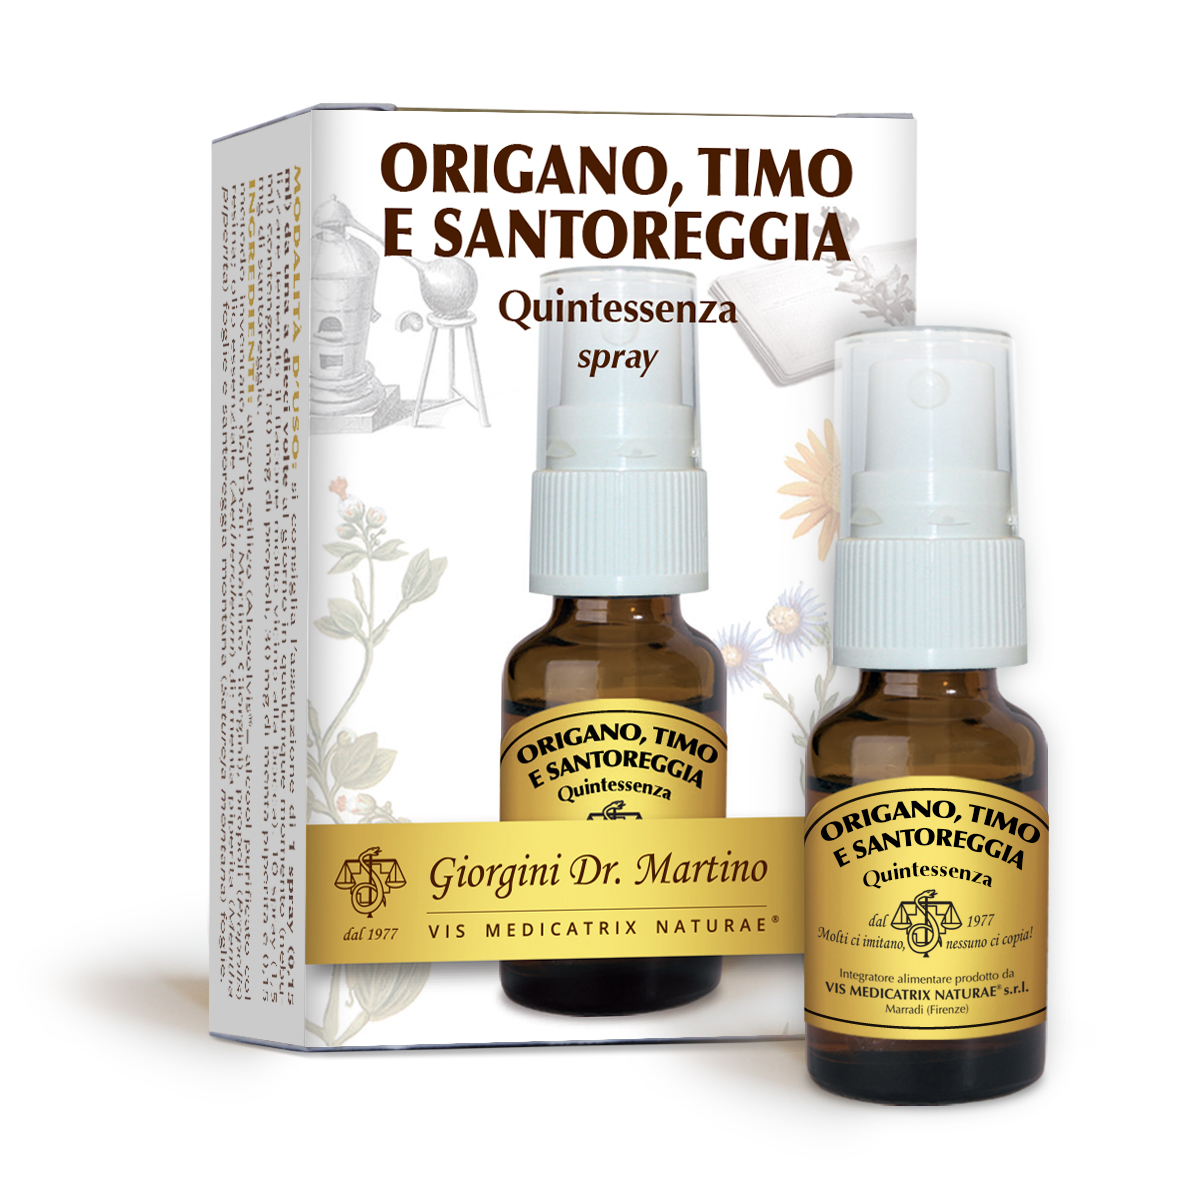 ORIGANO TIMO E SANTOREGGIA 15ml spray